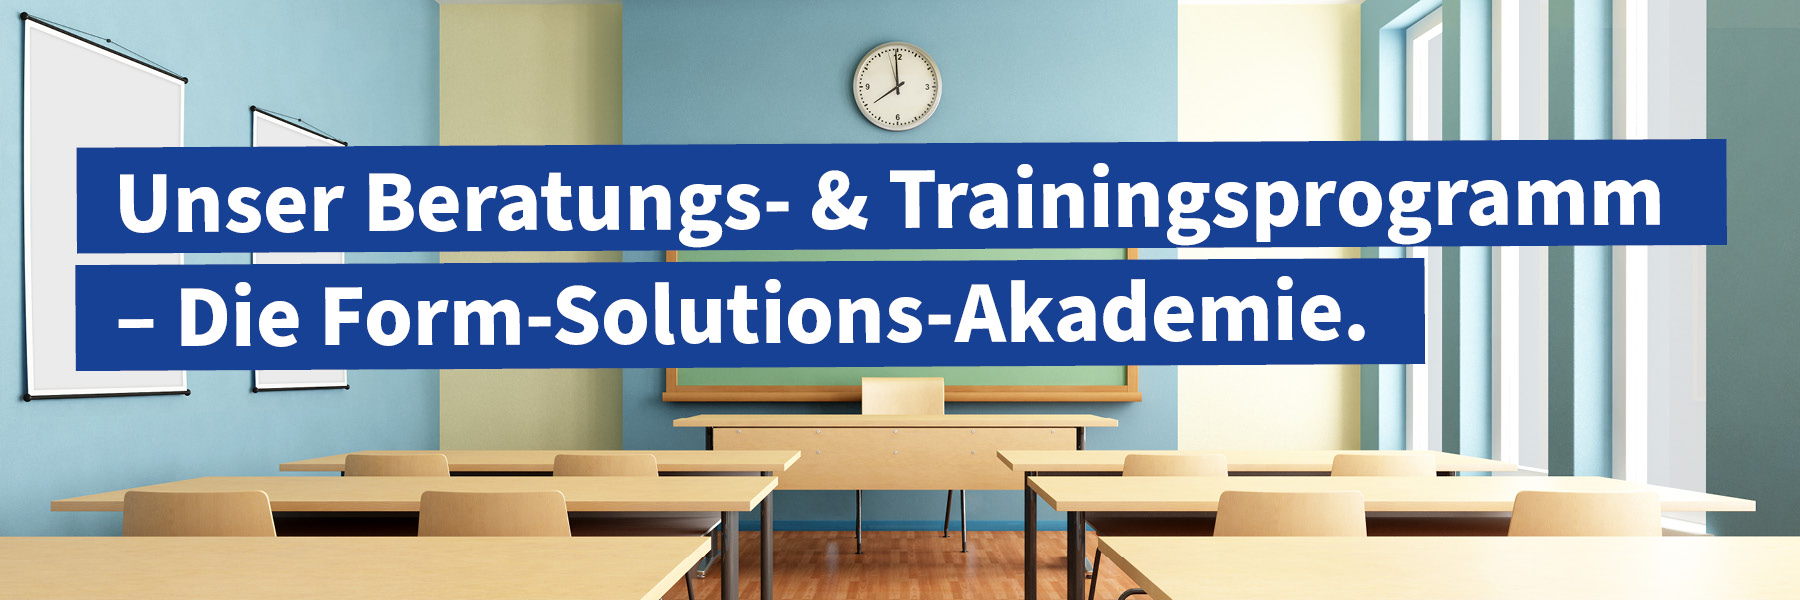 Unser Beratungs- & Trainingsprogramm - Die Form-Solutions-Akademie.